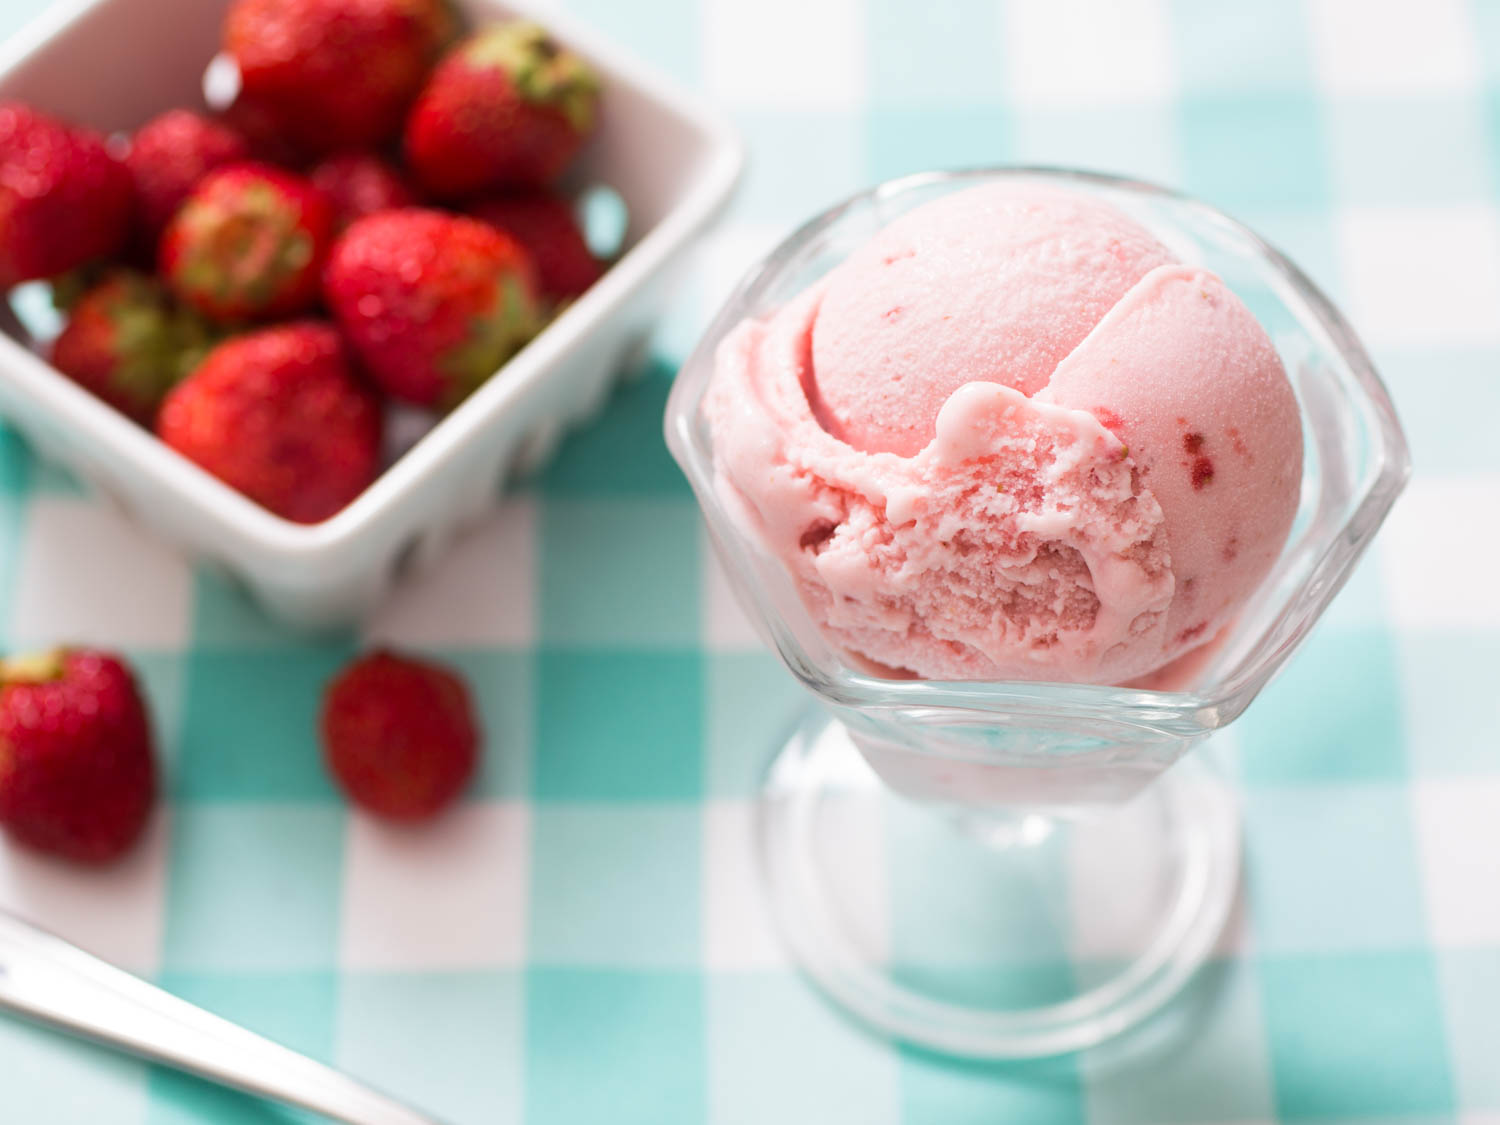 What Ice Cream Flavor Are You? Strawberry Ice Cream